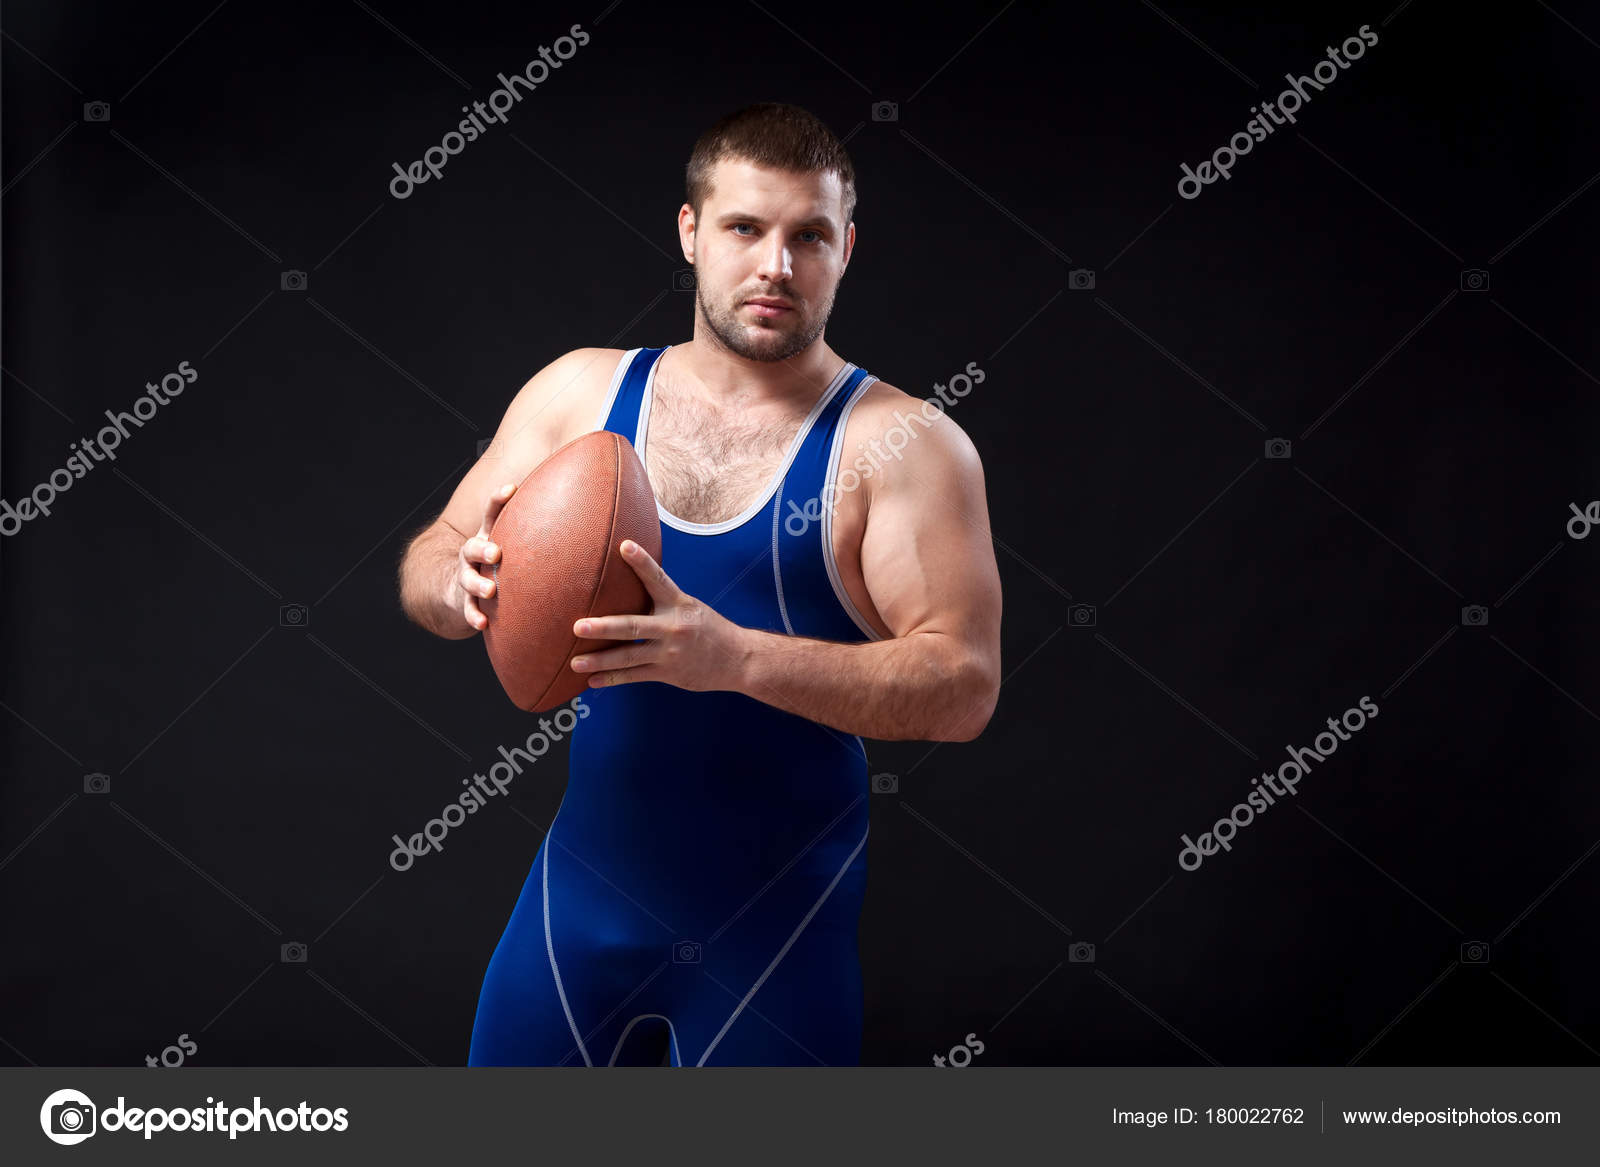 Roman adult wrestling greco